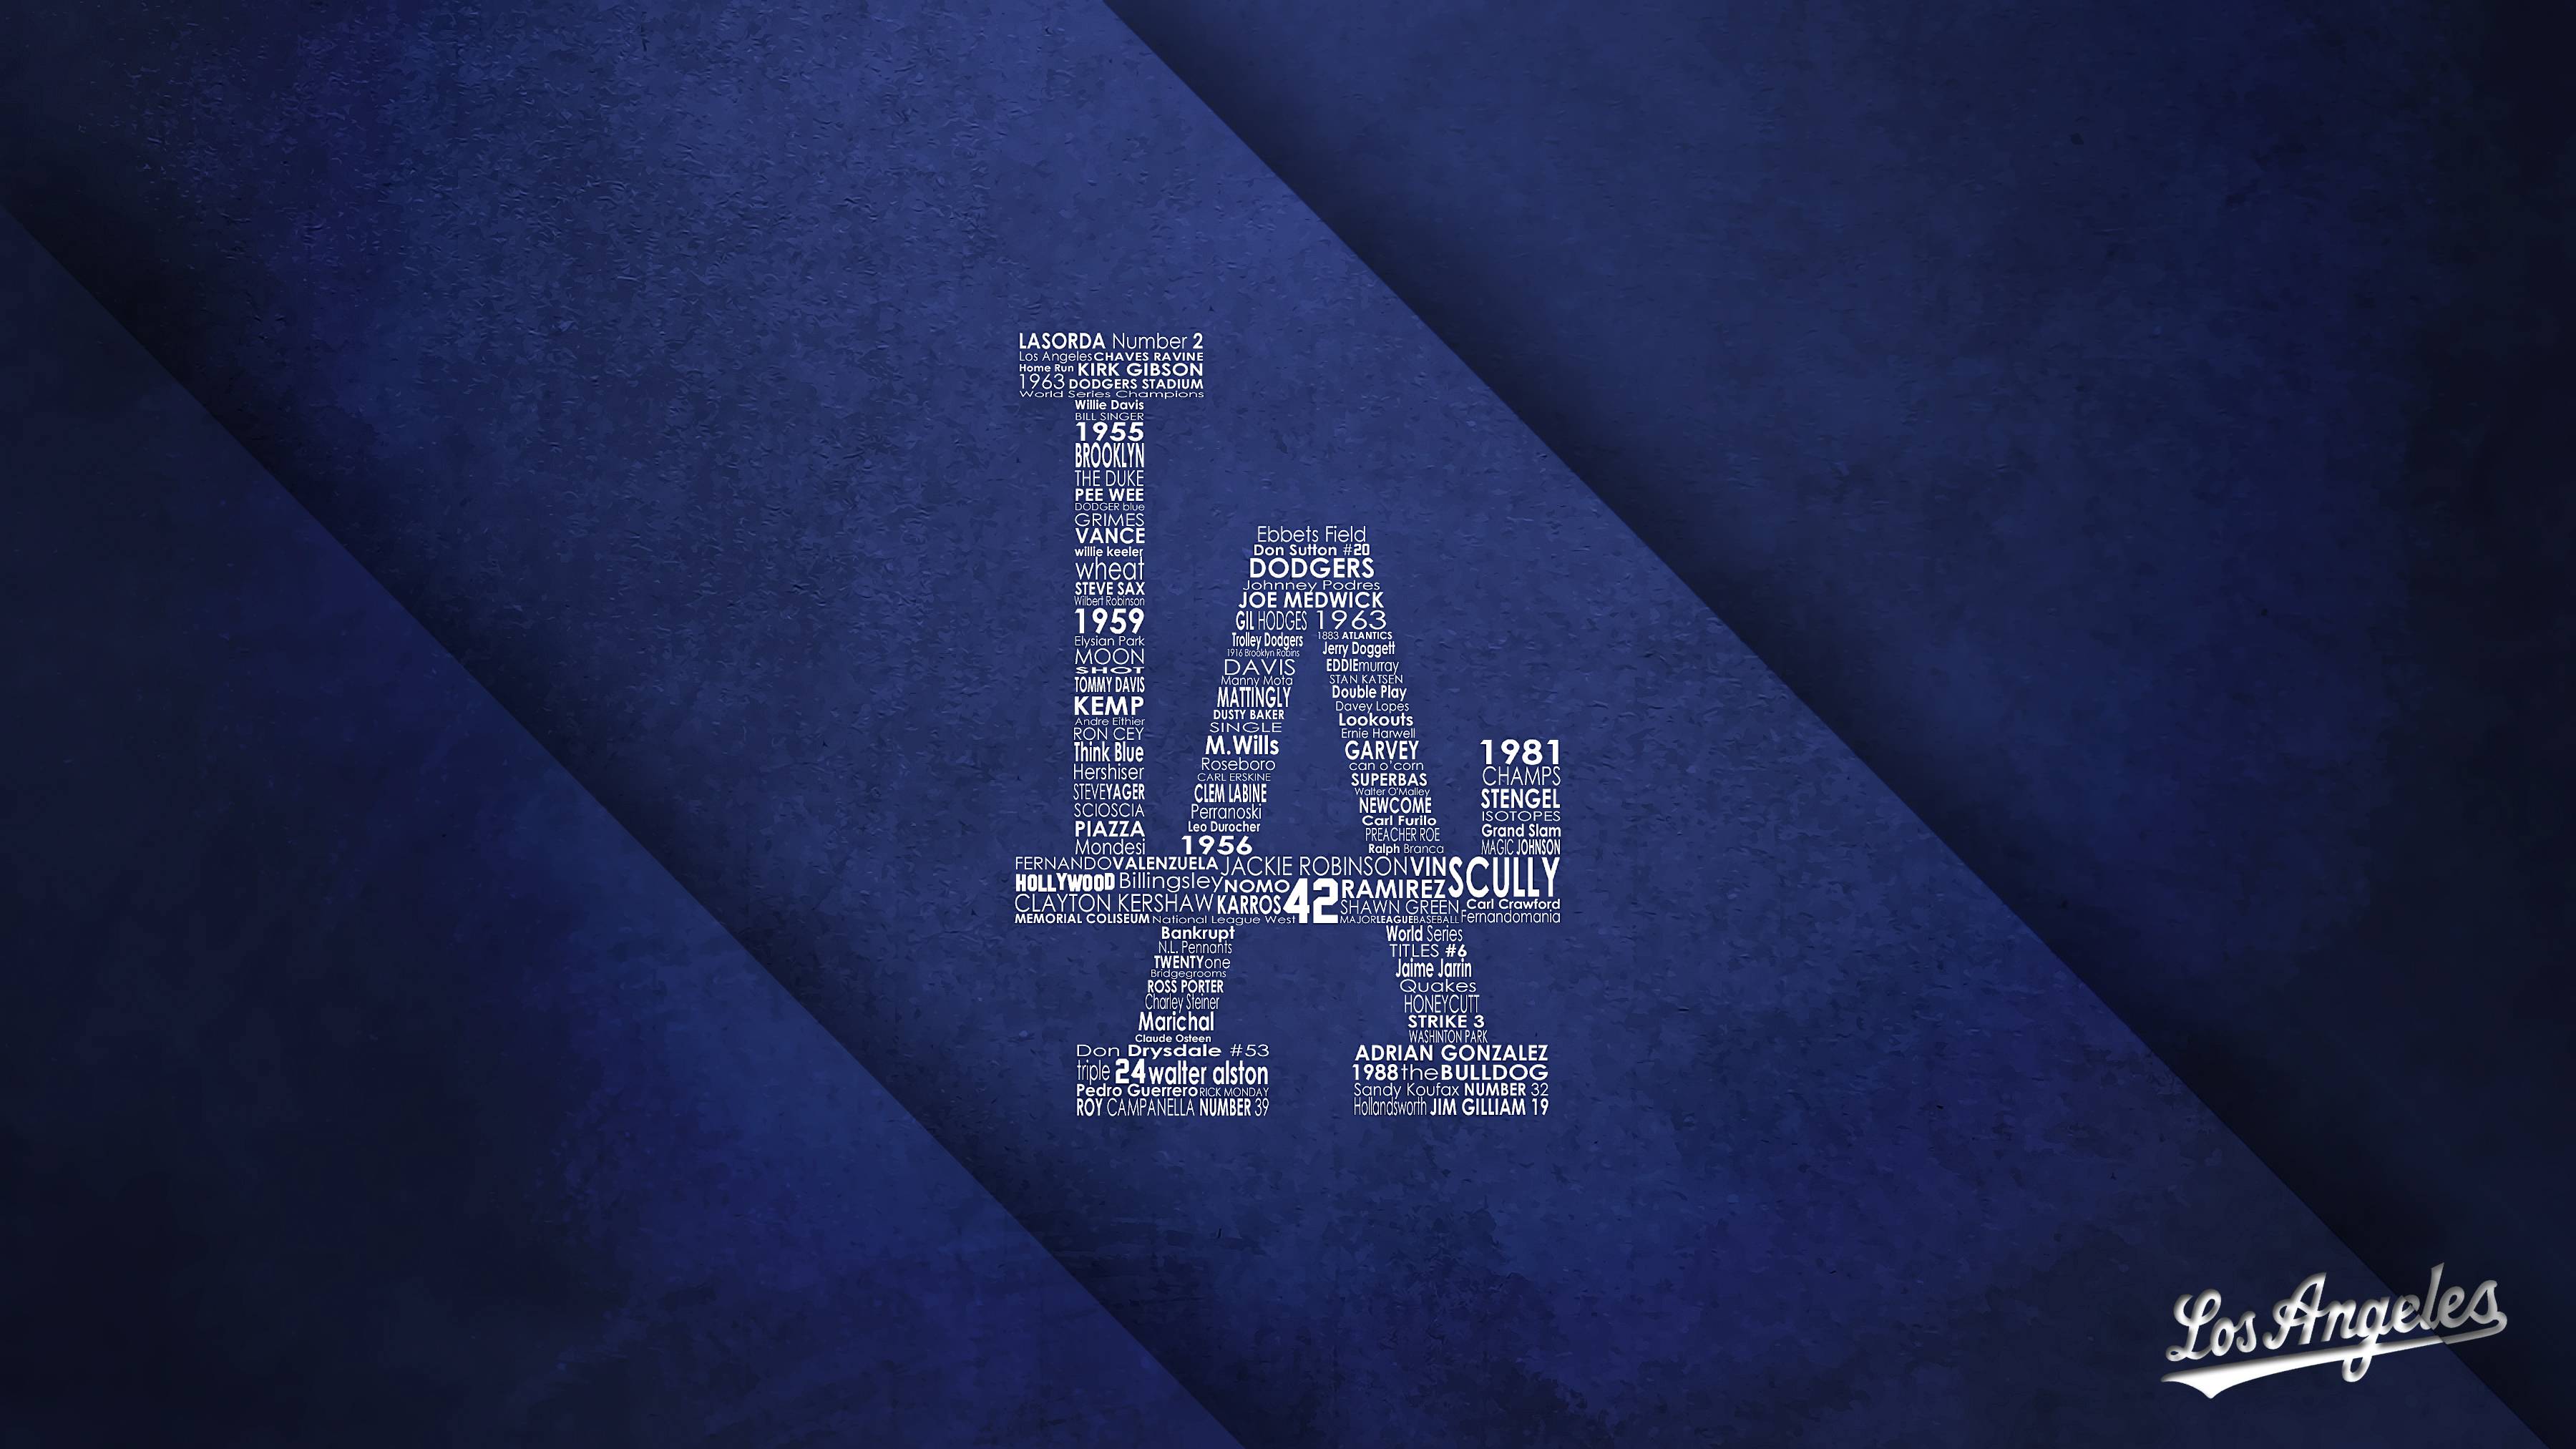 More Like LA Dodgers iPhone Wallpaper and Lock Screen